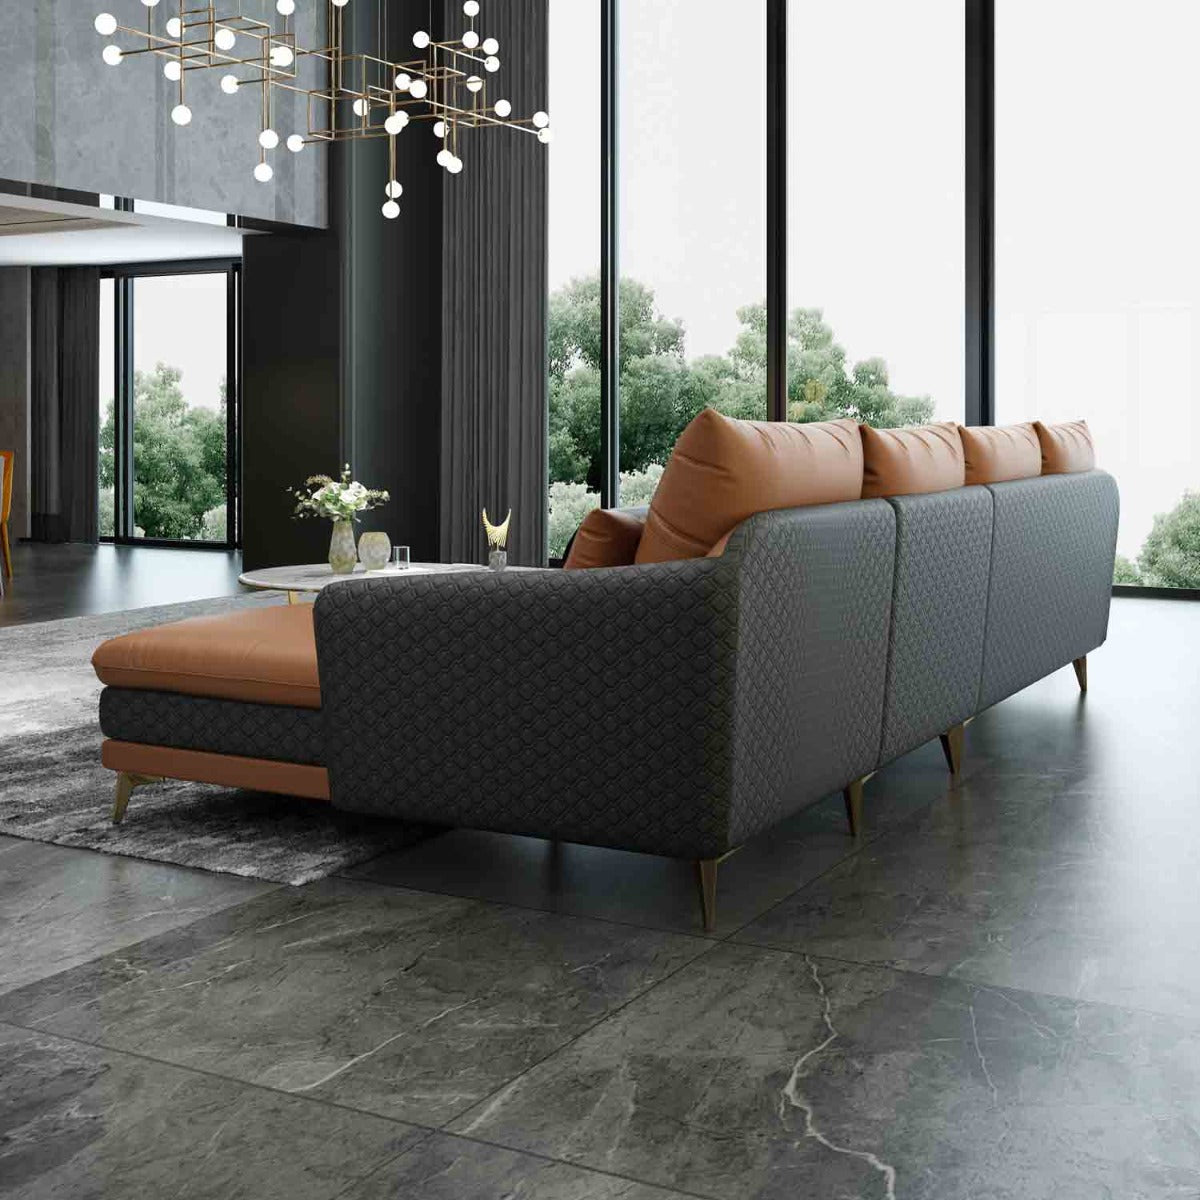 European Furniture - Icaro Right Hand Facing Sectional in Camel-Dark Grey - 64430R-4RHF - New Star Living